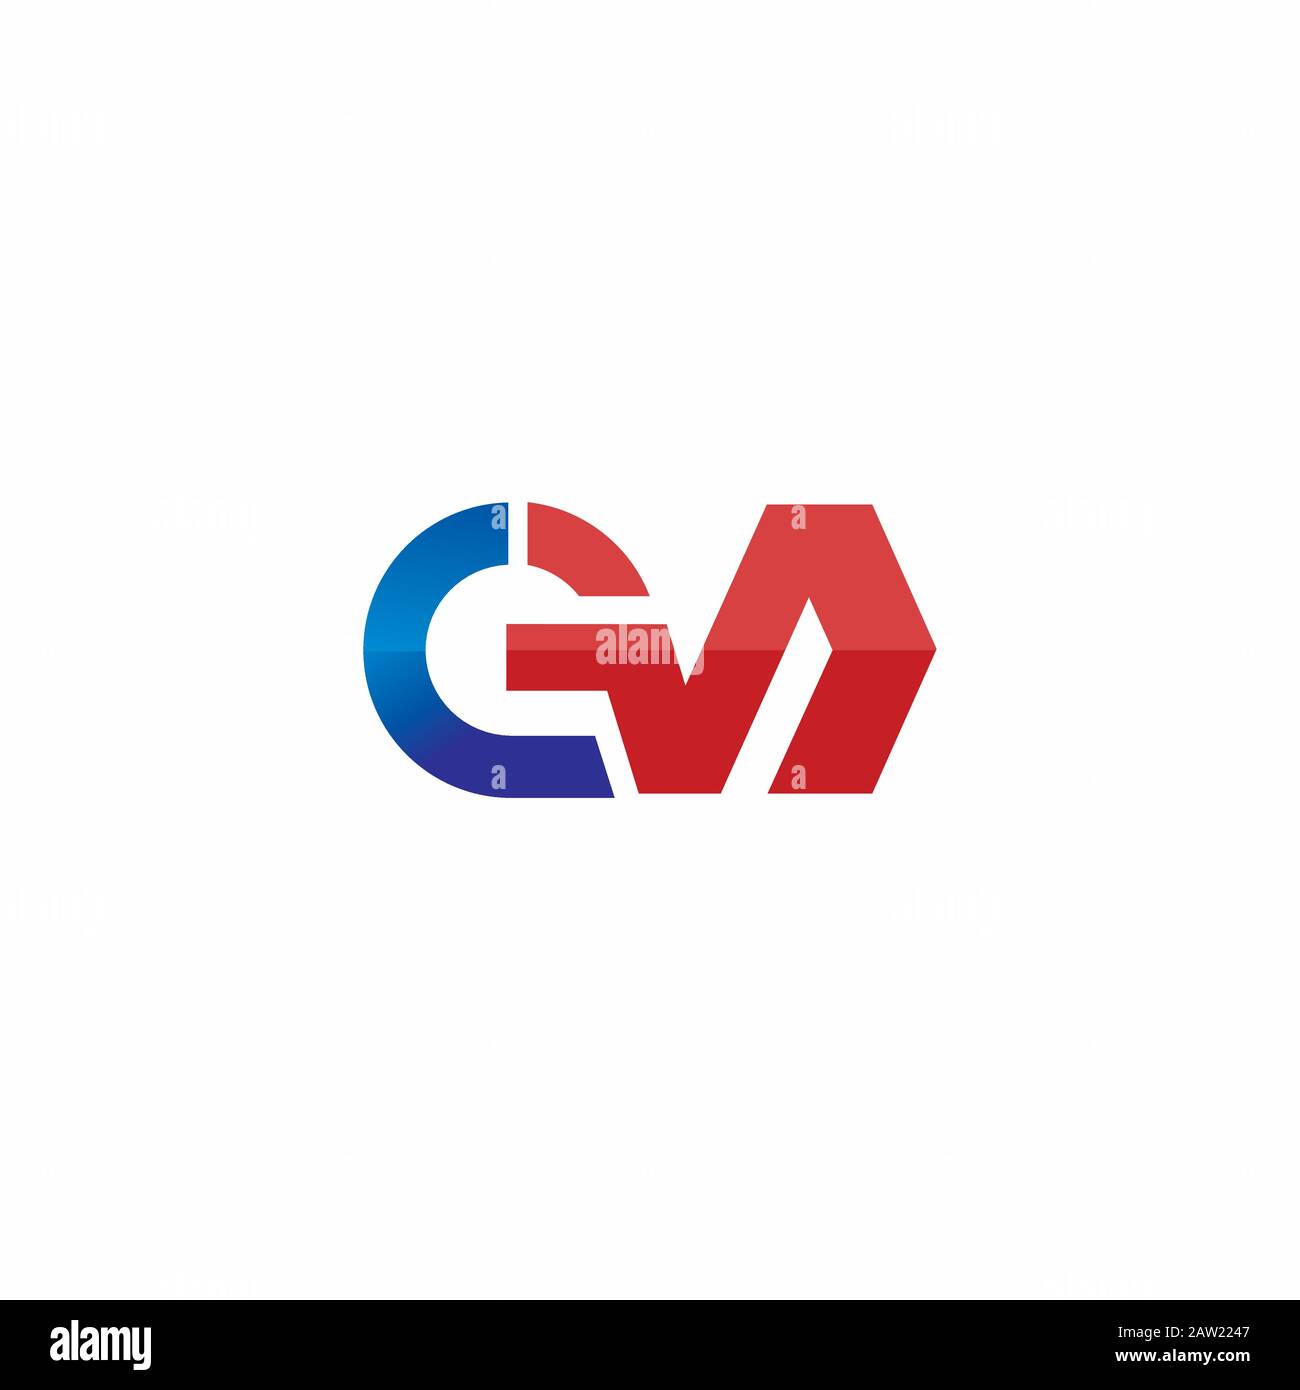 Letter gm logo Stock Photos, Royalty Free Letter gm logo Images